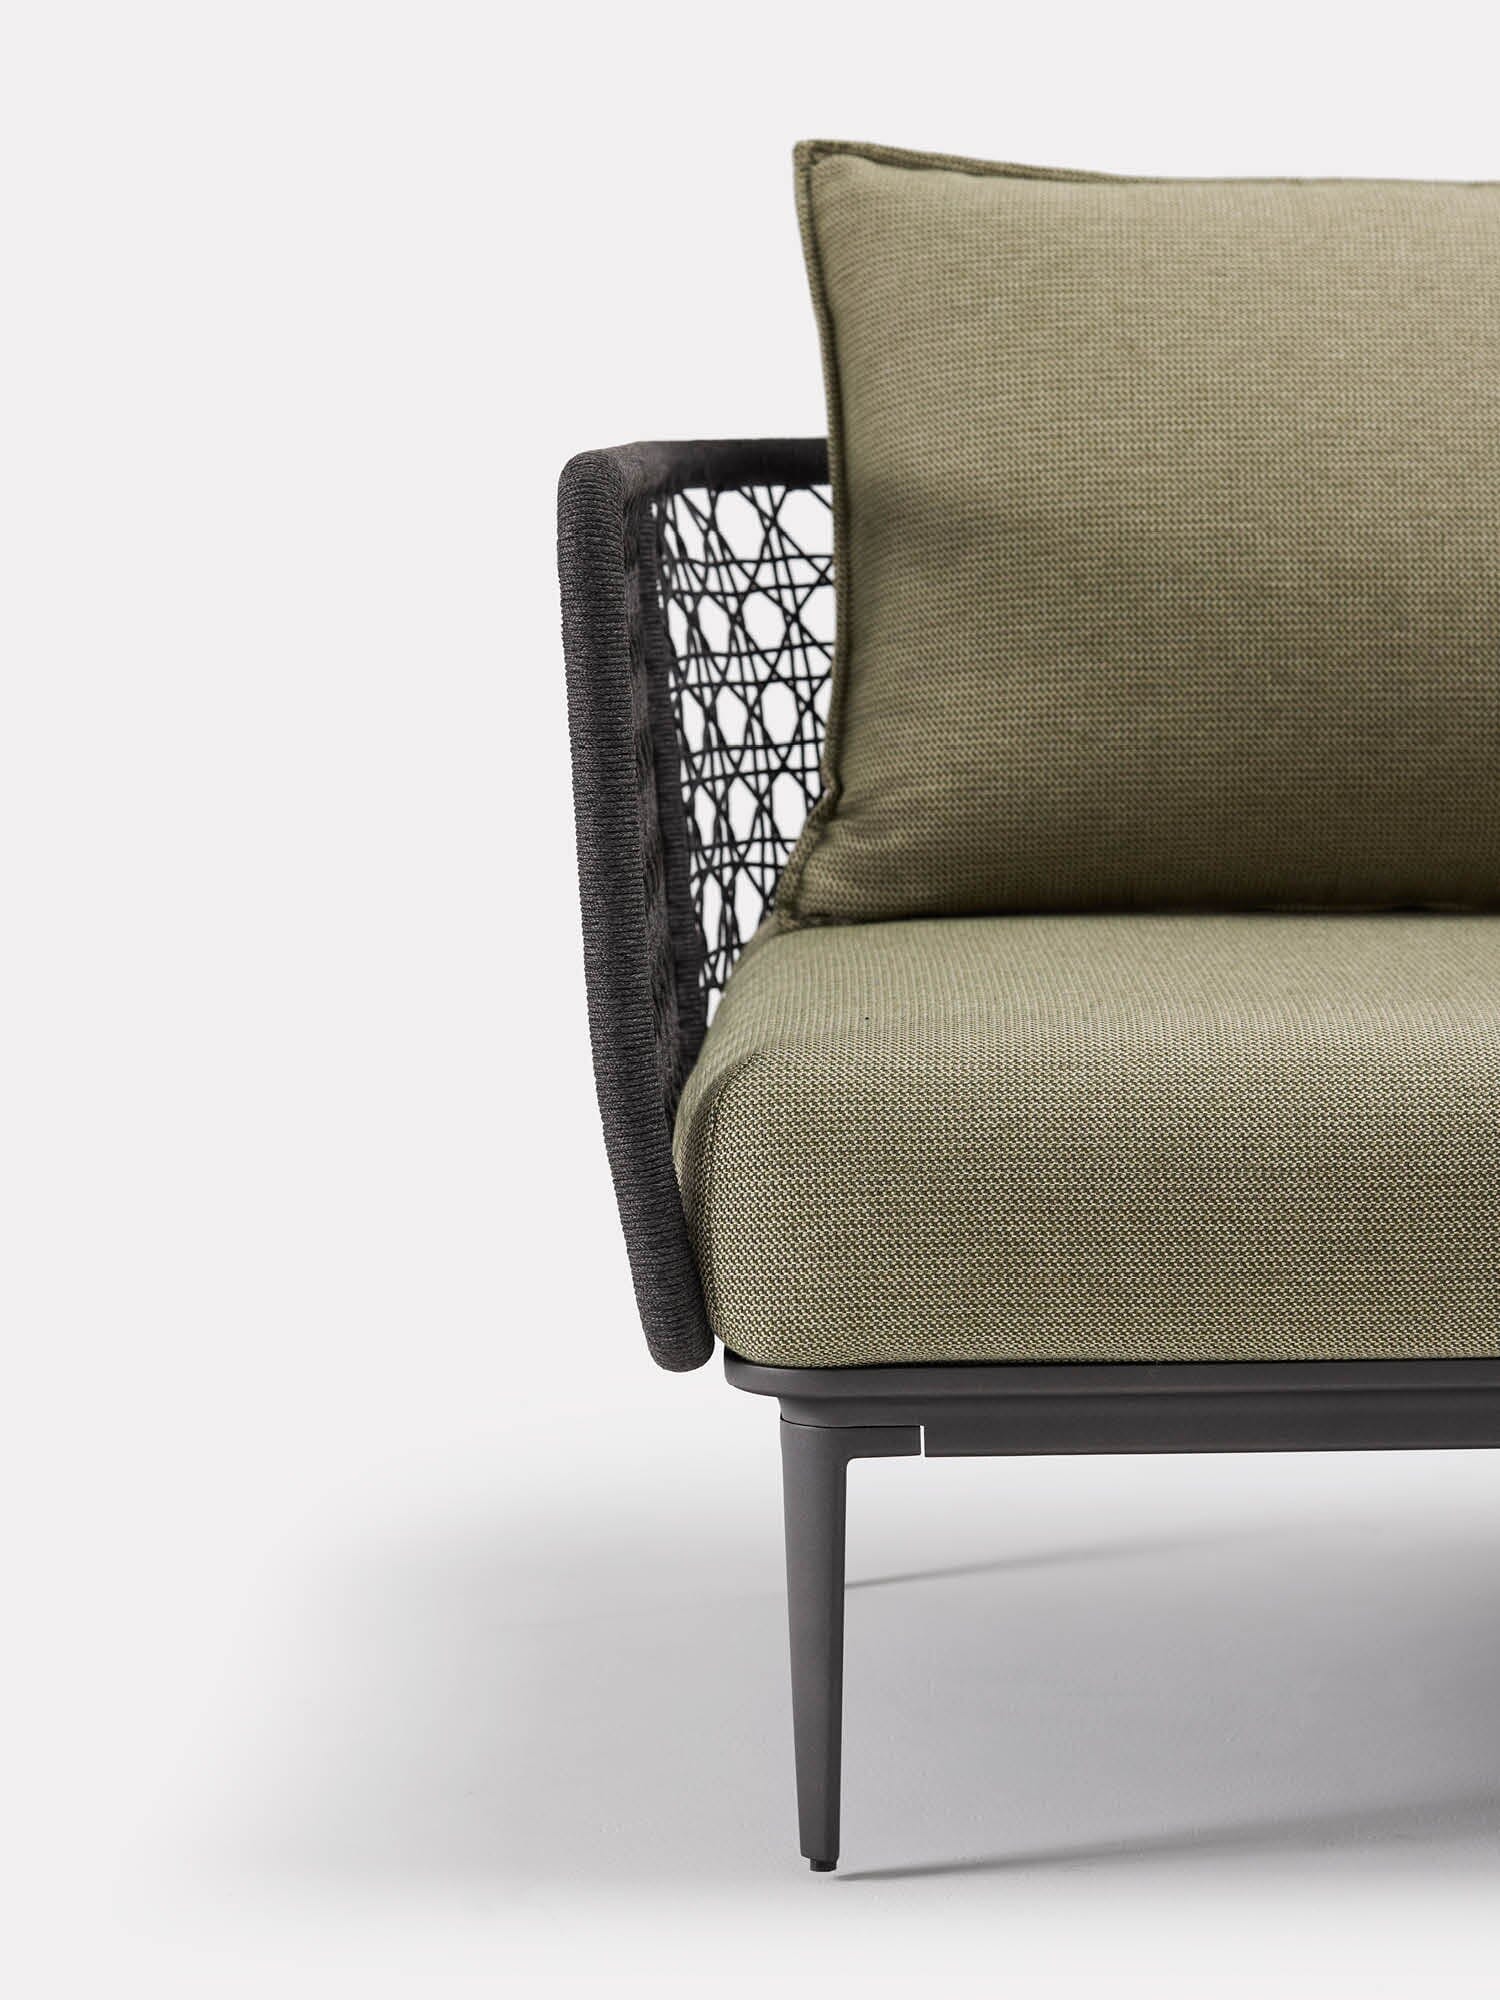 Aireys Woven Sofa 30% Off Outdoor Furniture Kett 